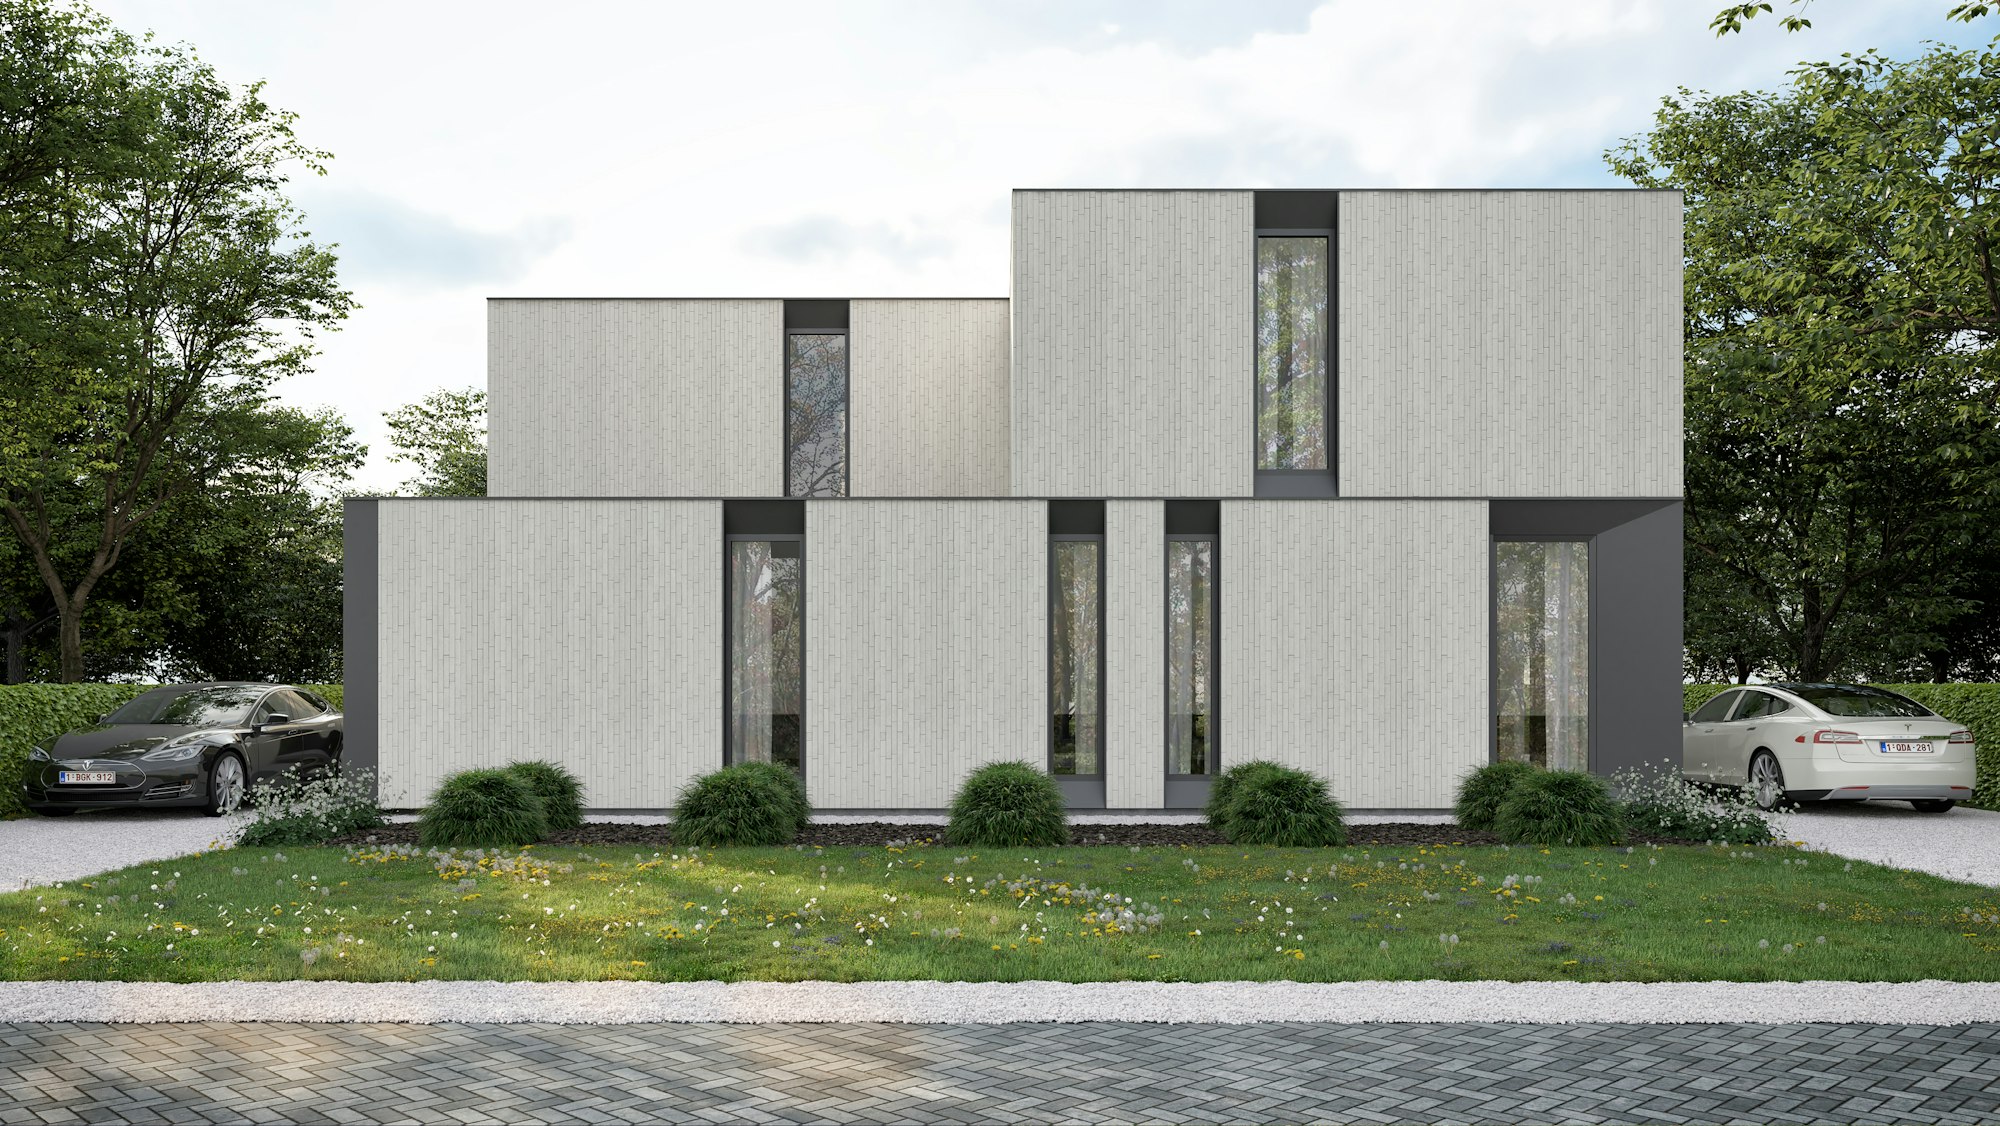 Skilpod #130 — houtskeletbouw woning met 4 slaapkamers, modern design met witte steen